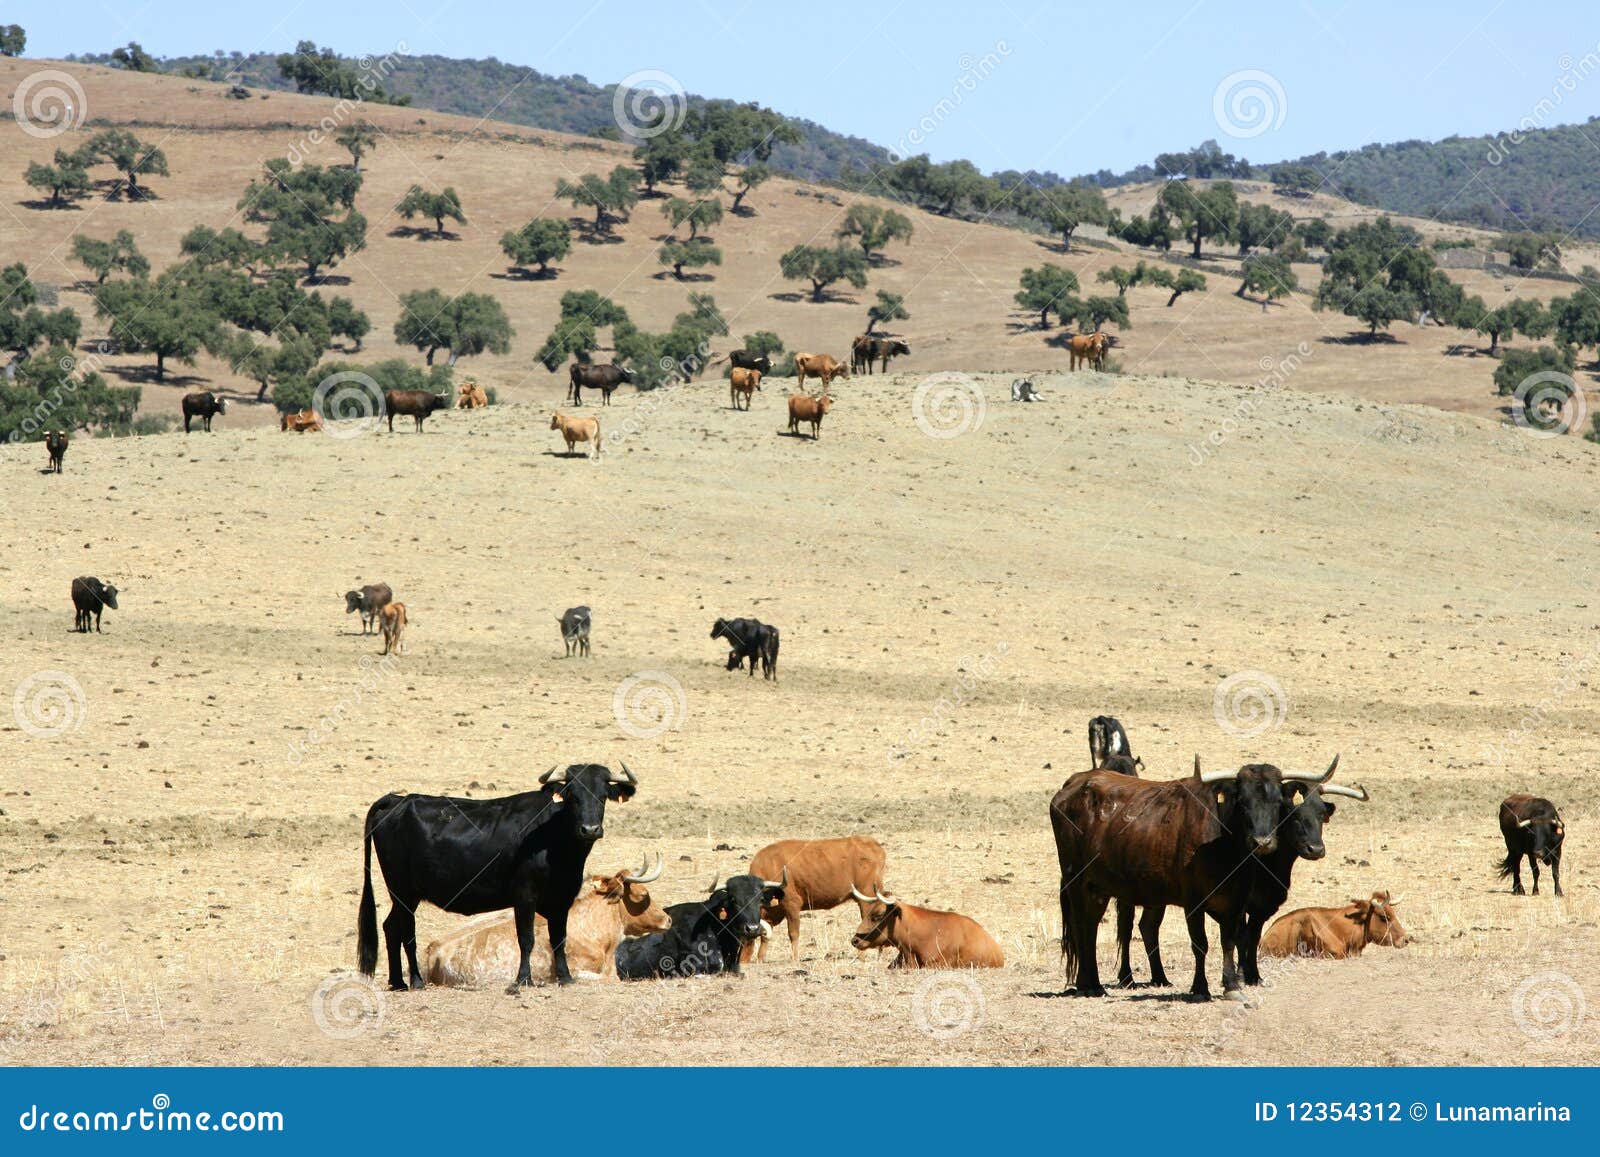 bull cattle black toro in southern spain